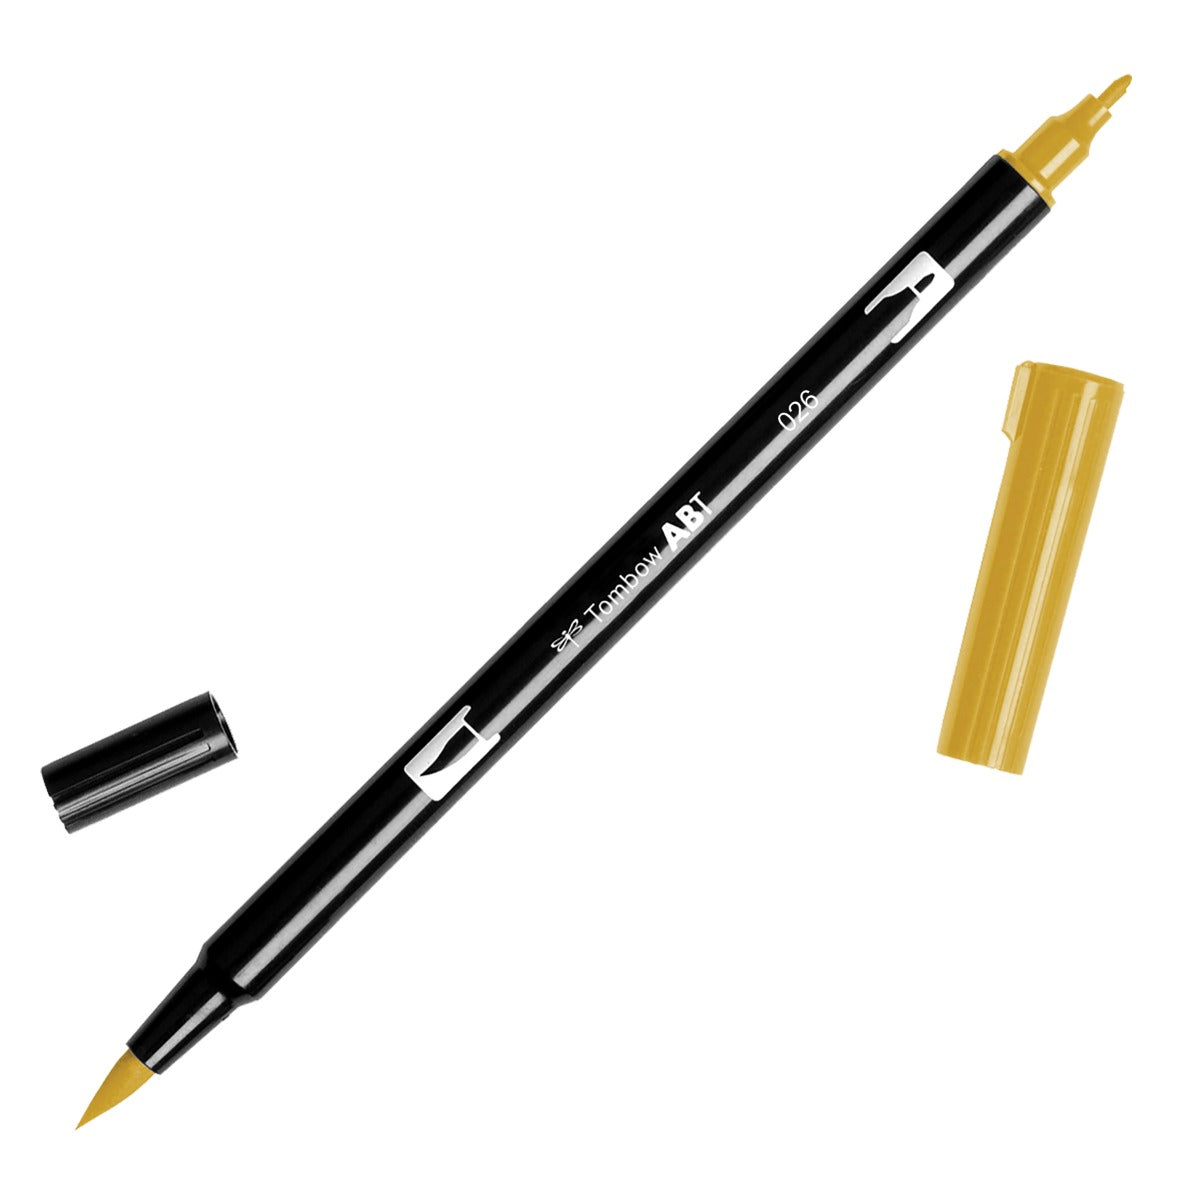 Tombow Dual Brush Pen 026 Yellow Gold